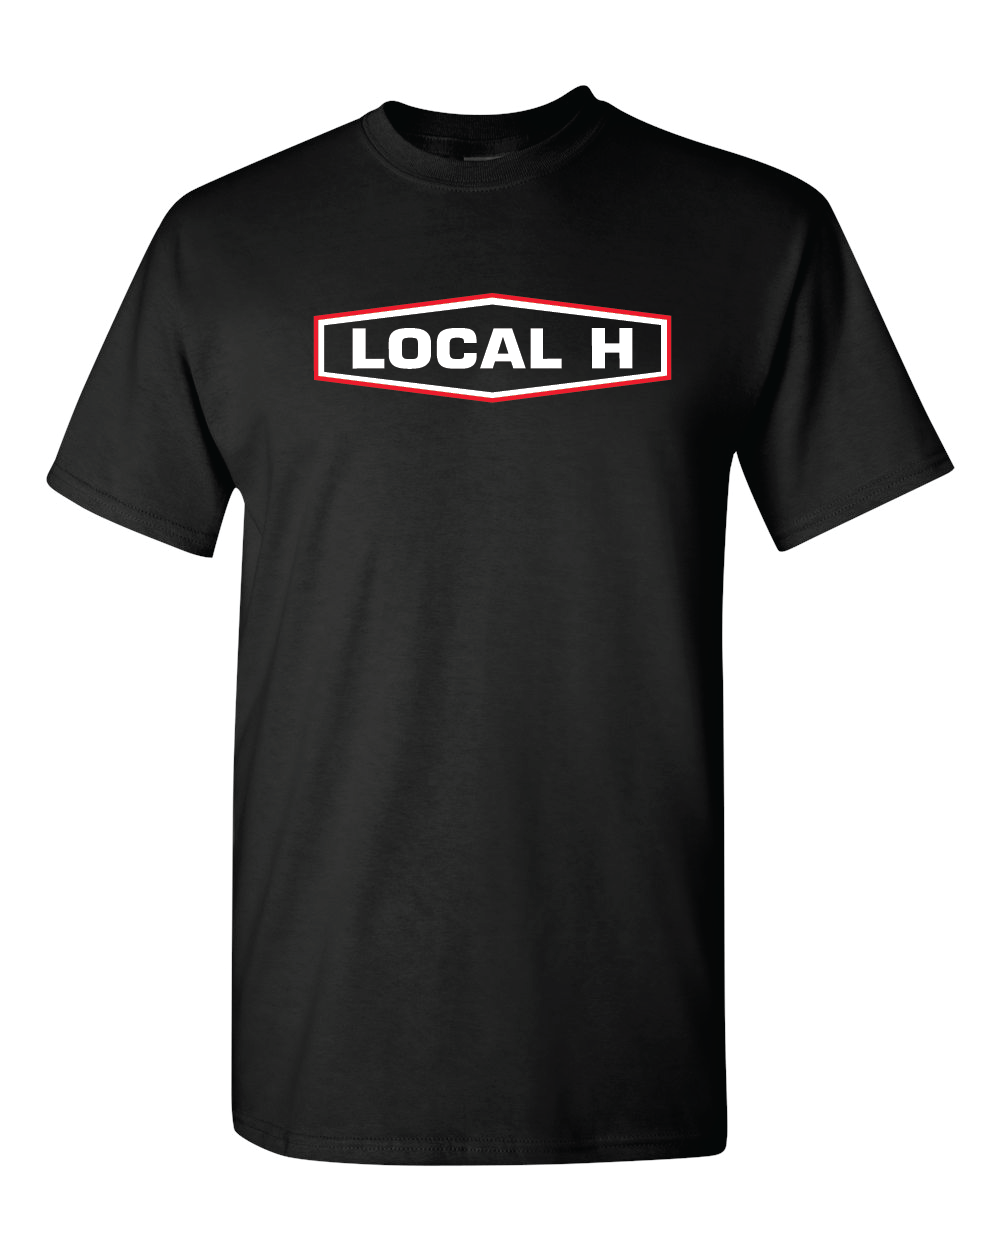 Tee Logo - Local H logo Tee shirt